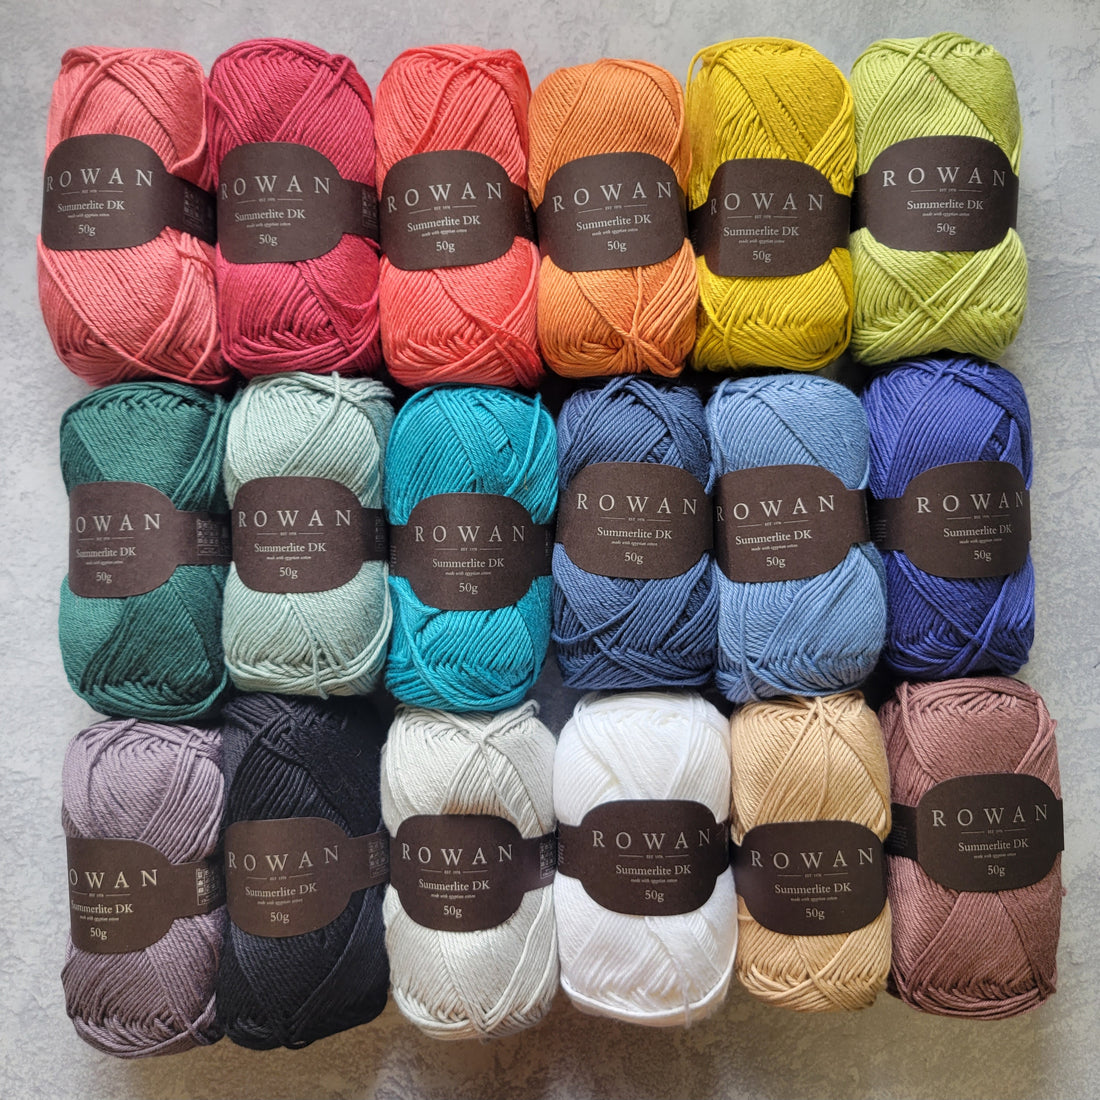  a rainbow of cotton balls of yarns